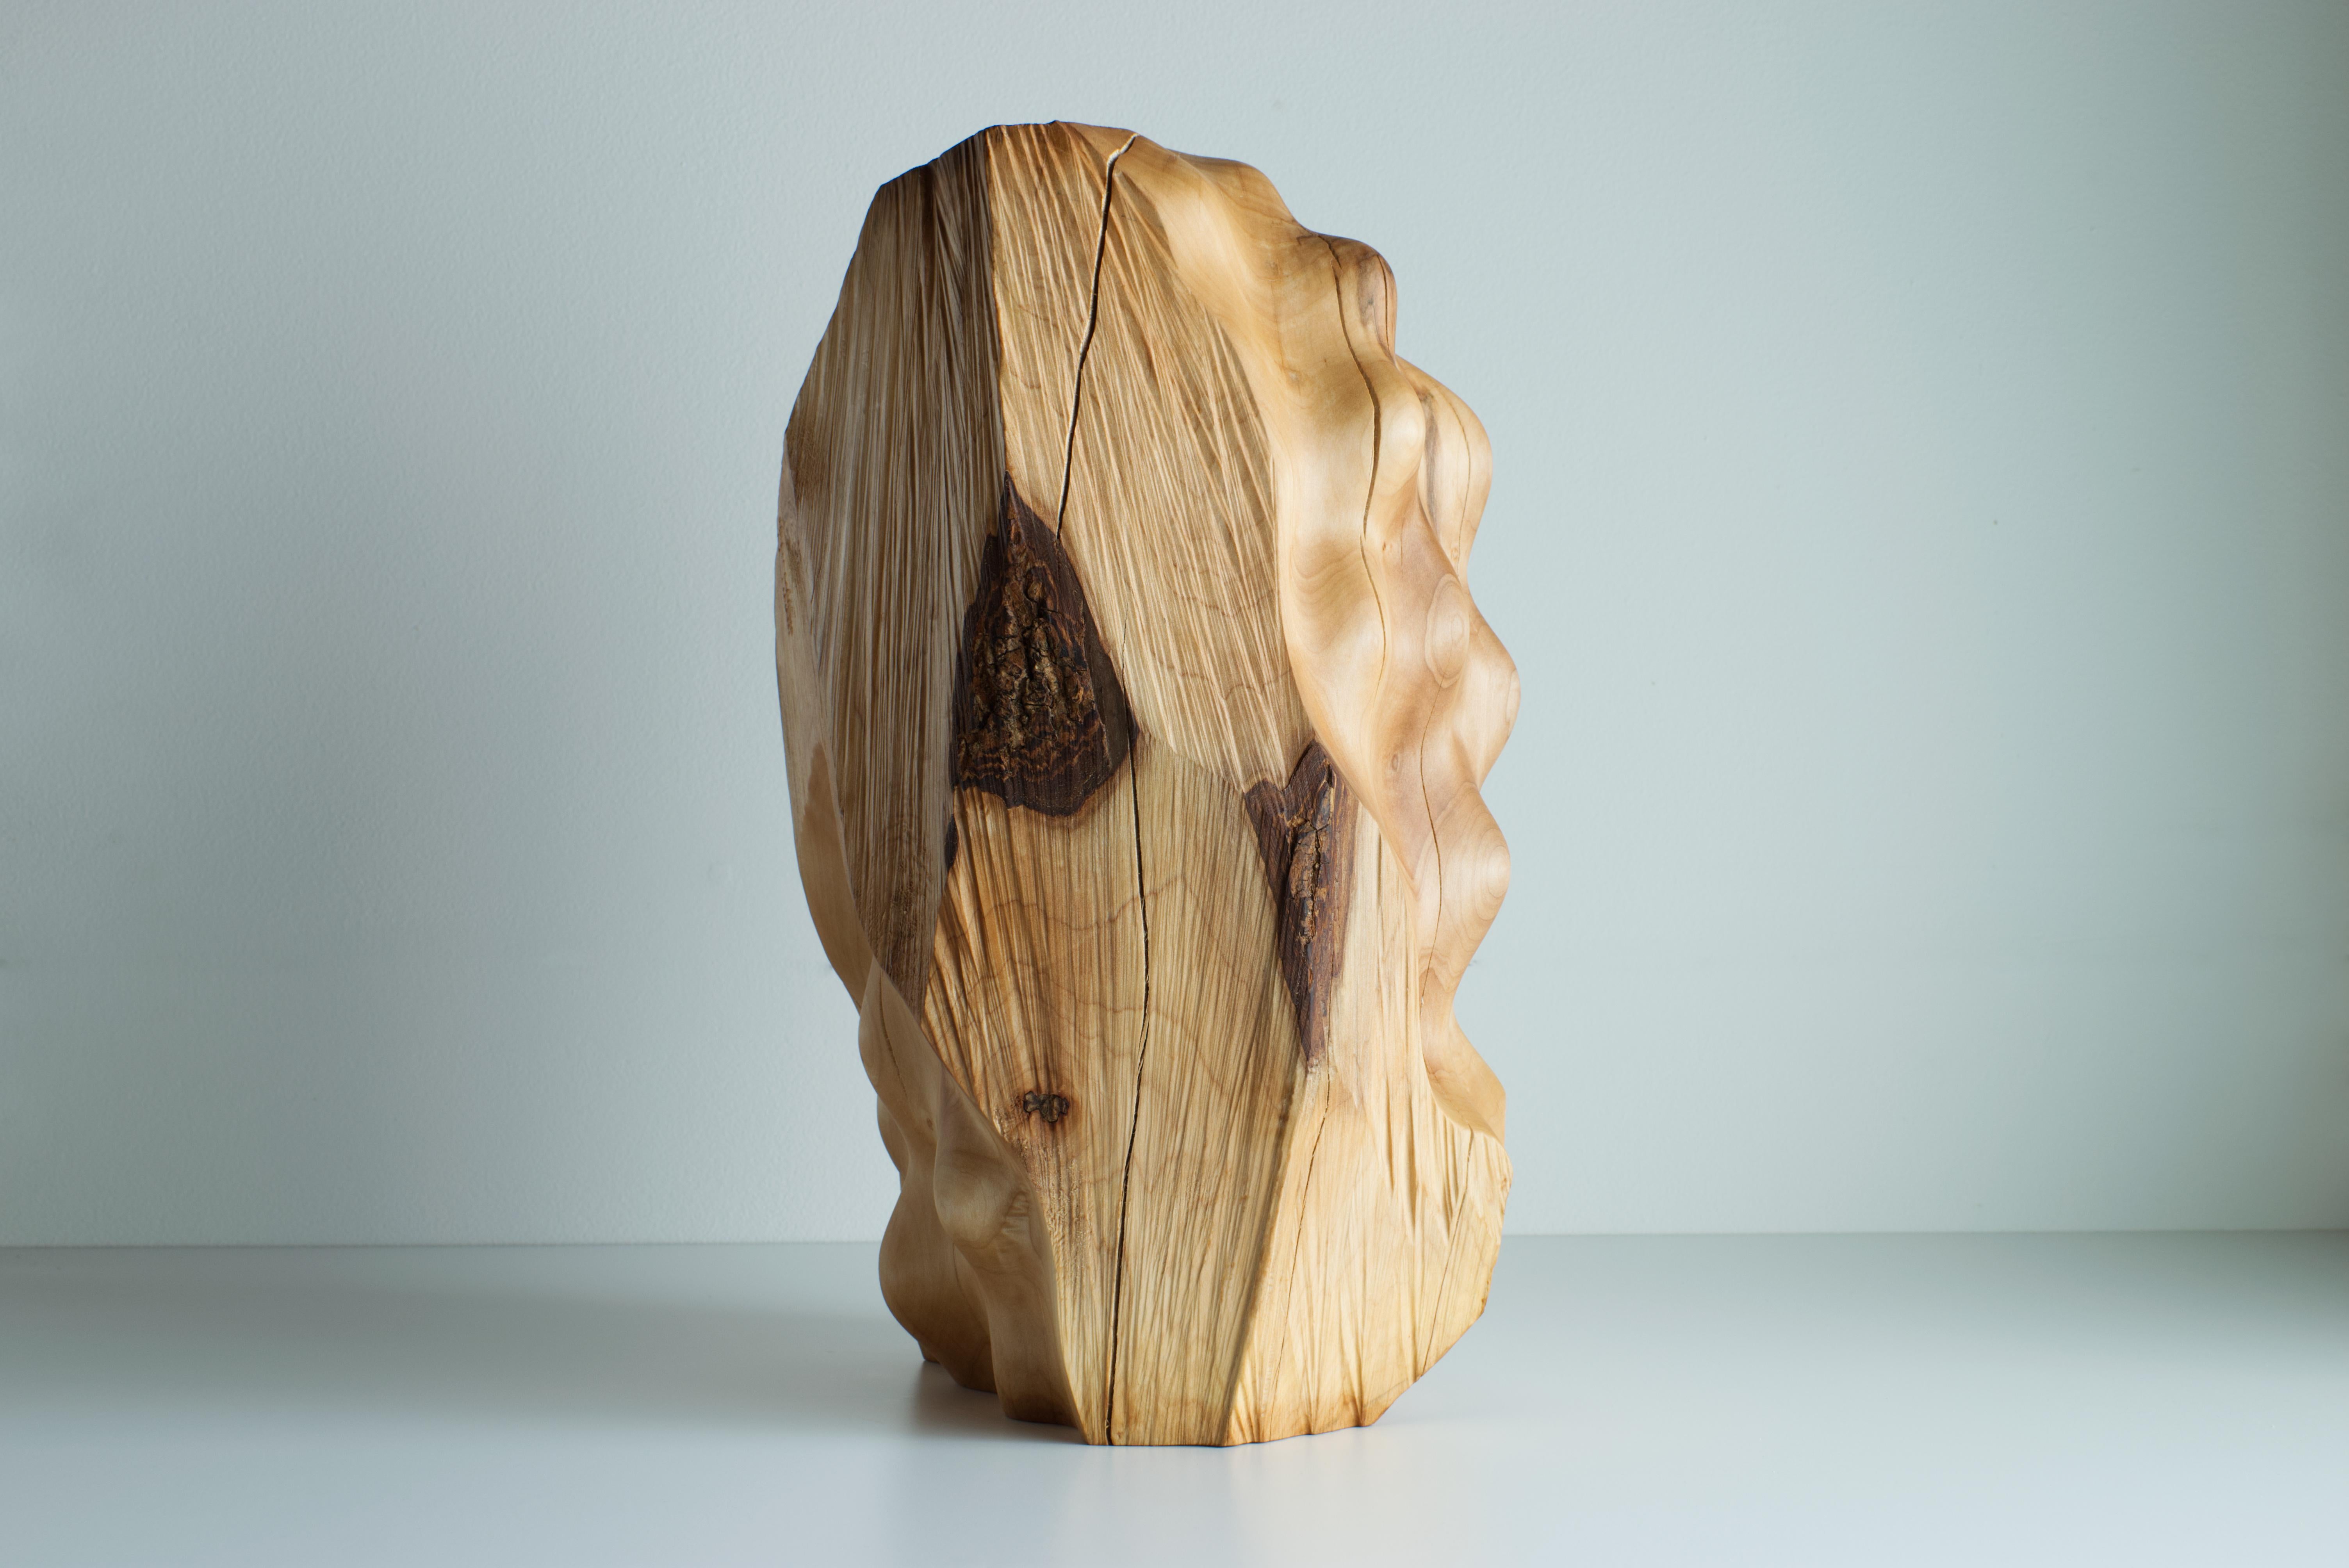 Duality (sculpture, wood, organic, dynamic, natural, brutalistic) - Sculpture by Gabriel Tarmassi